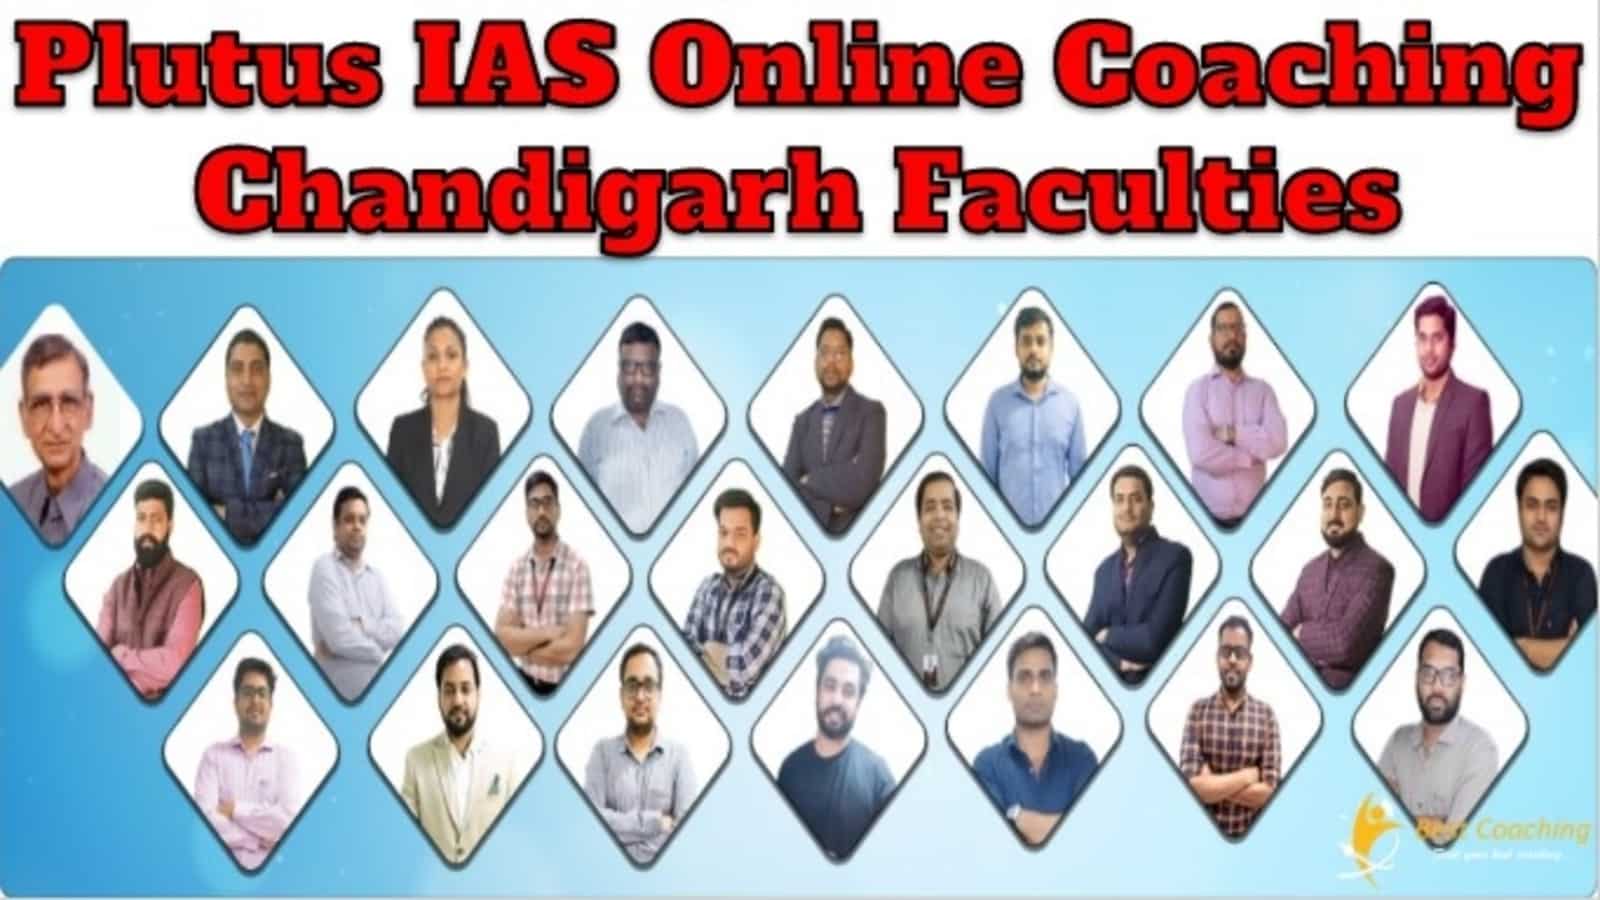 Plutus IAS Online Coaching Chandigarh Faculties